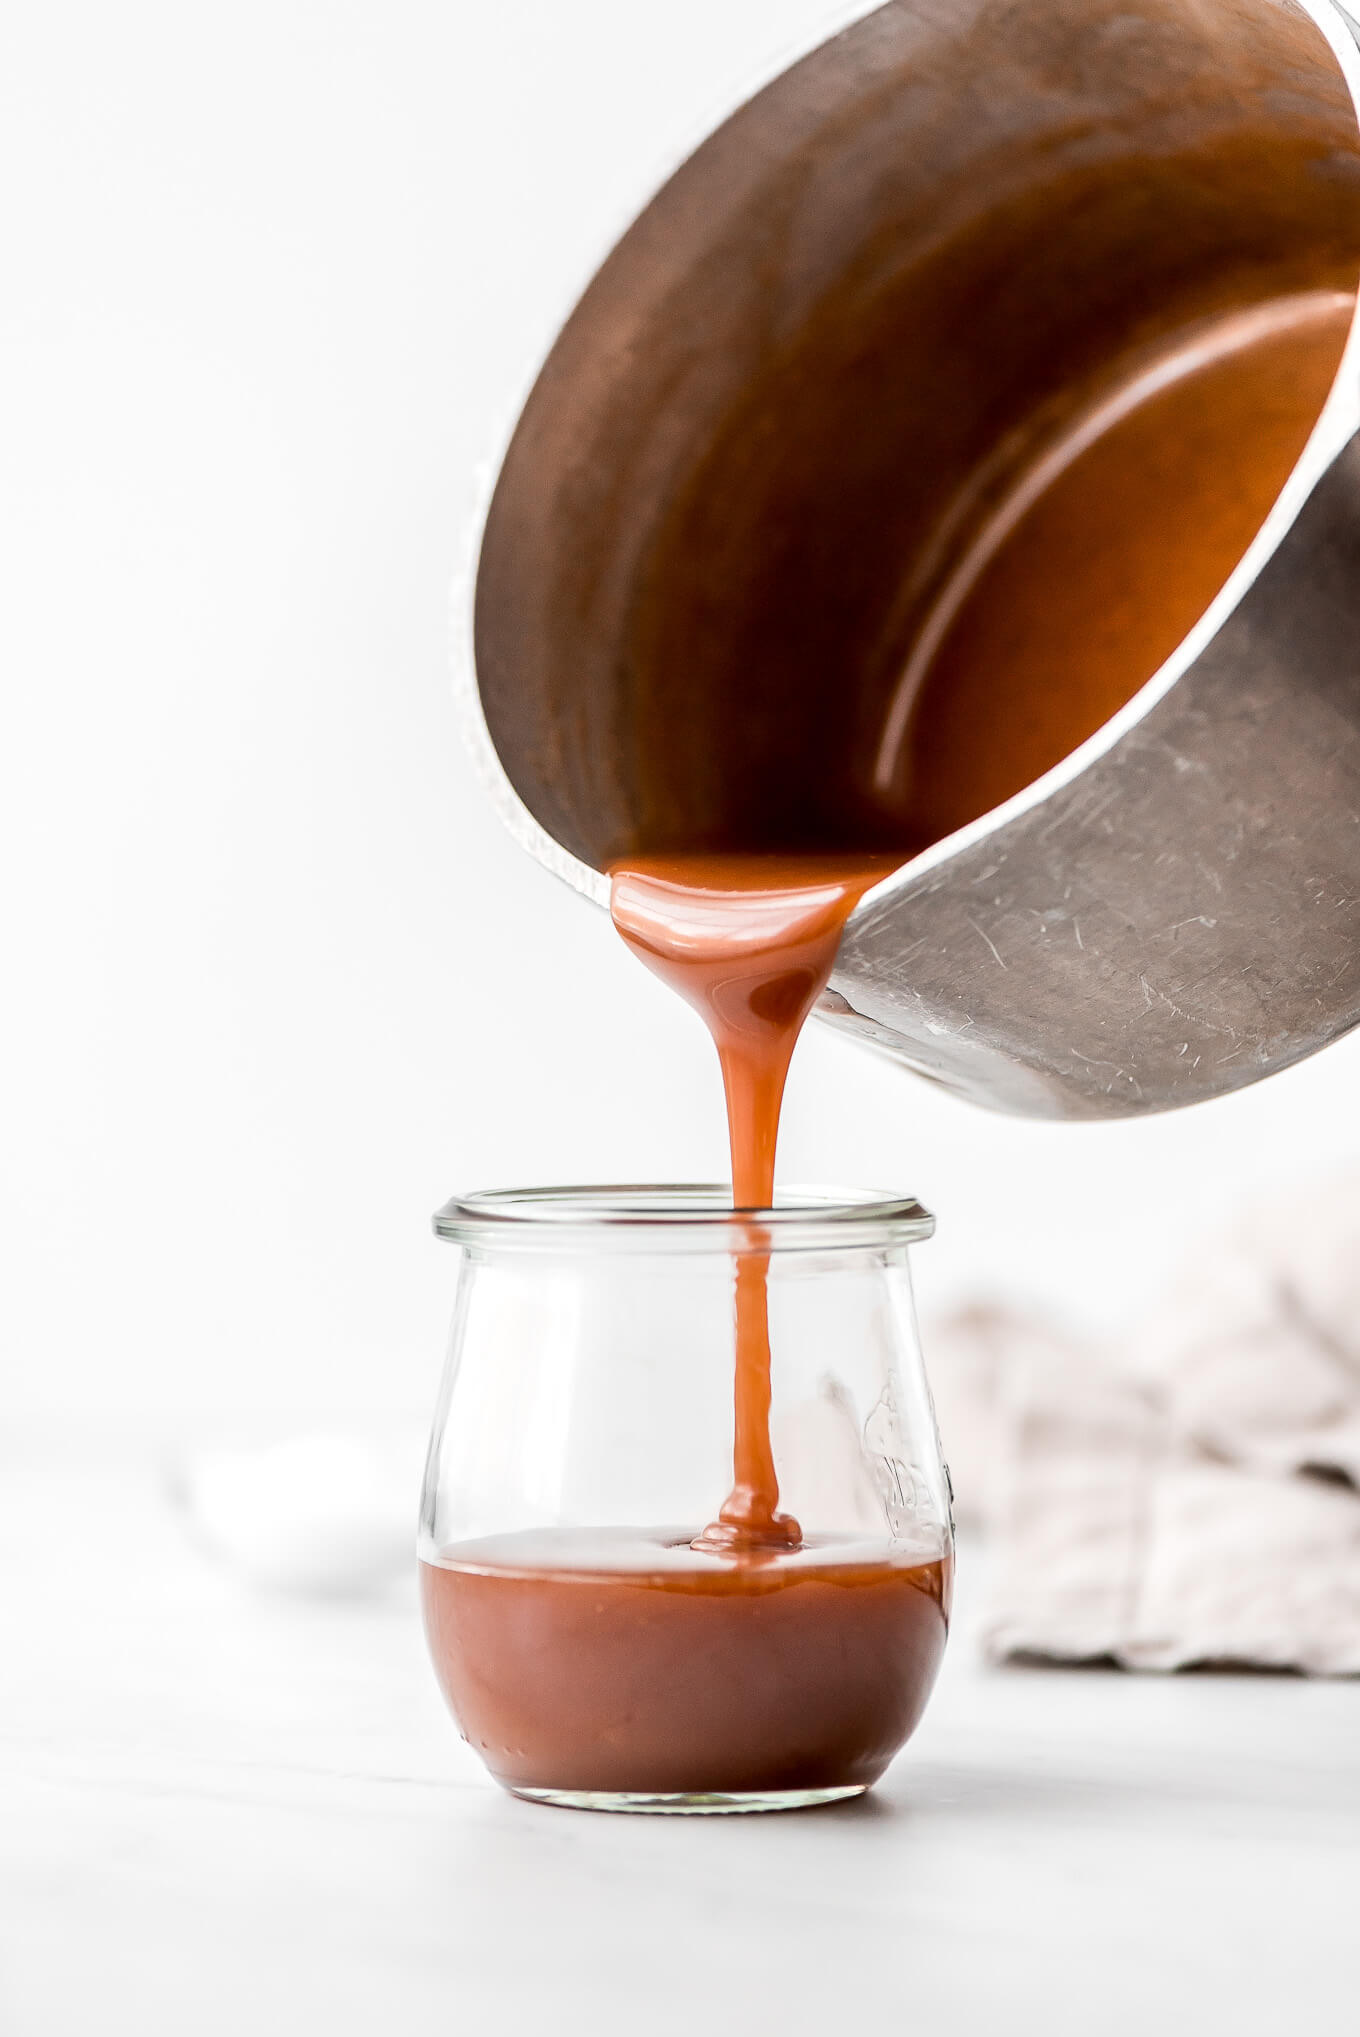 Pouring caramel into a glass jar.